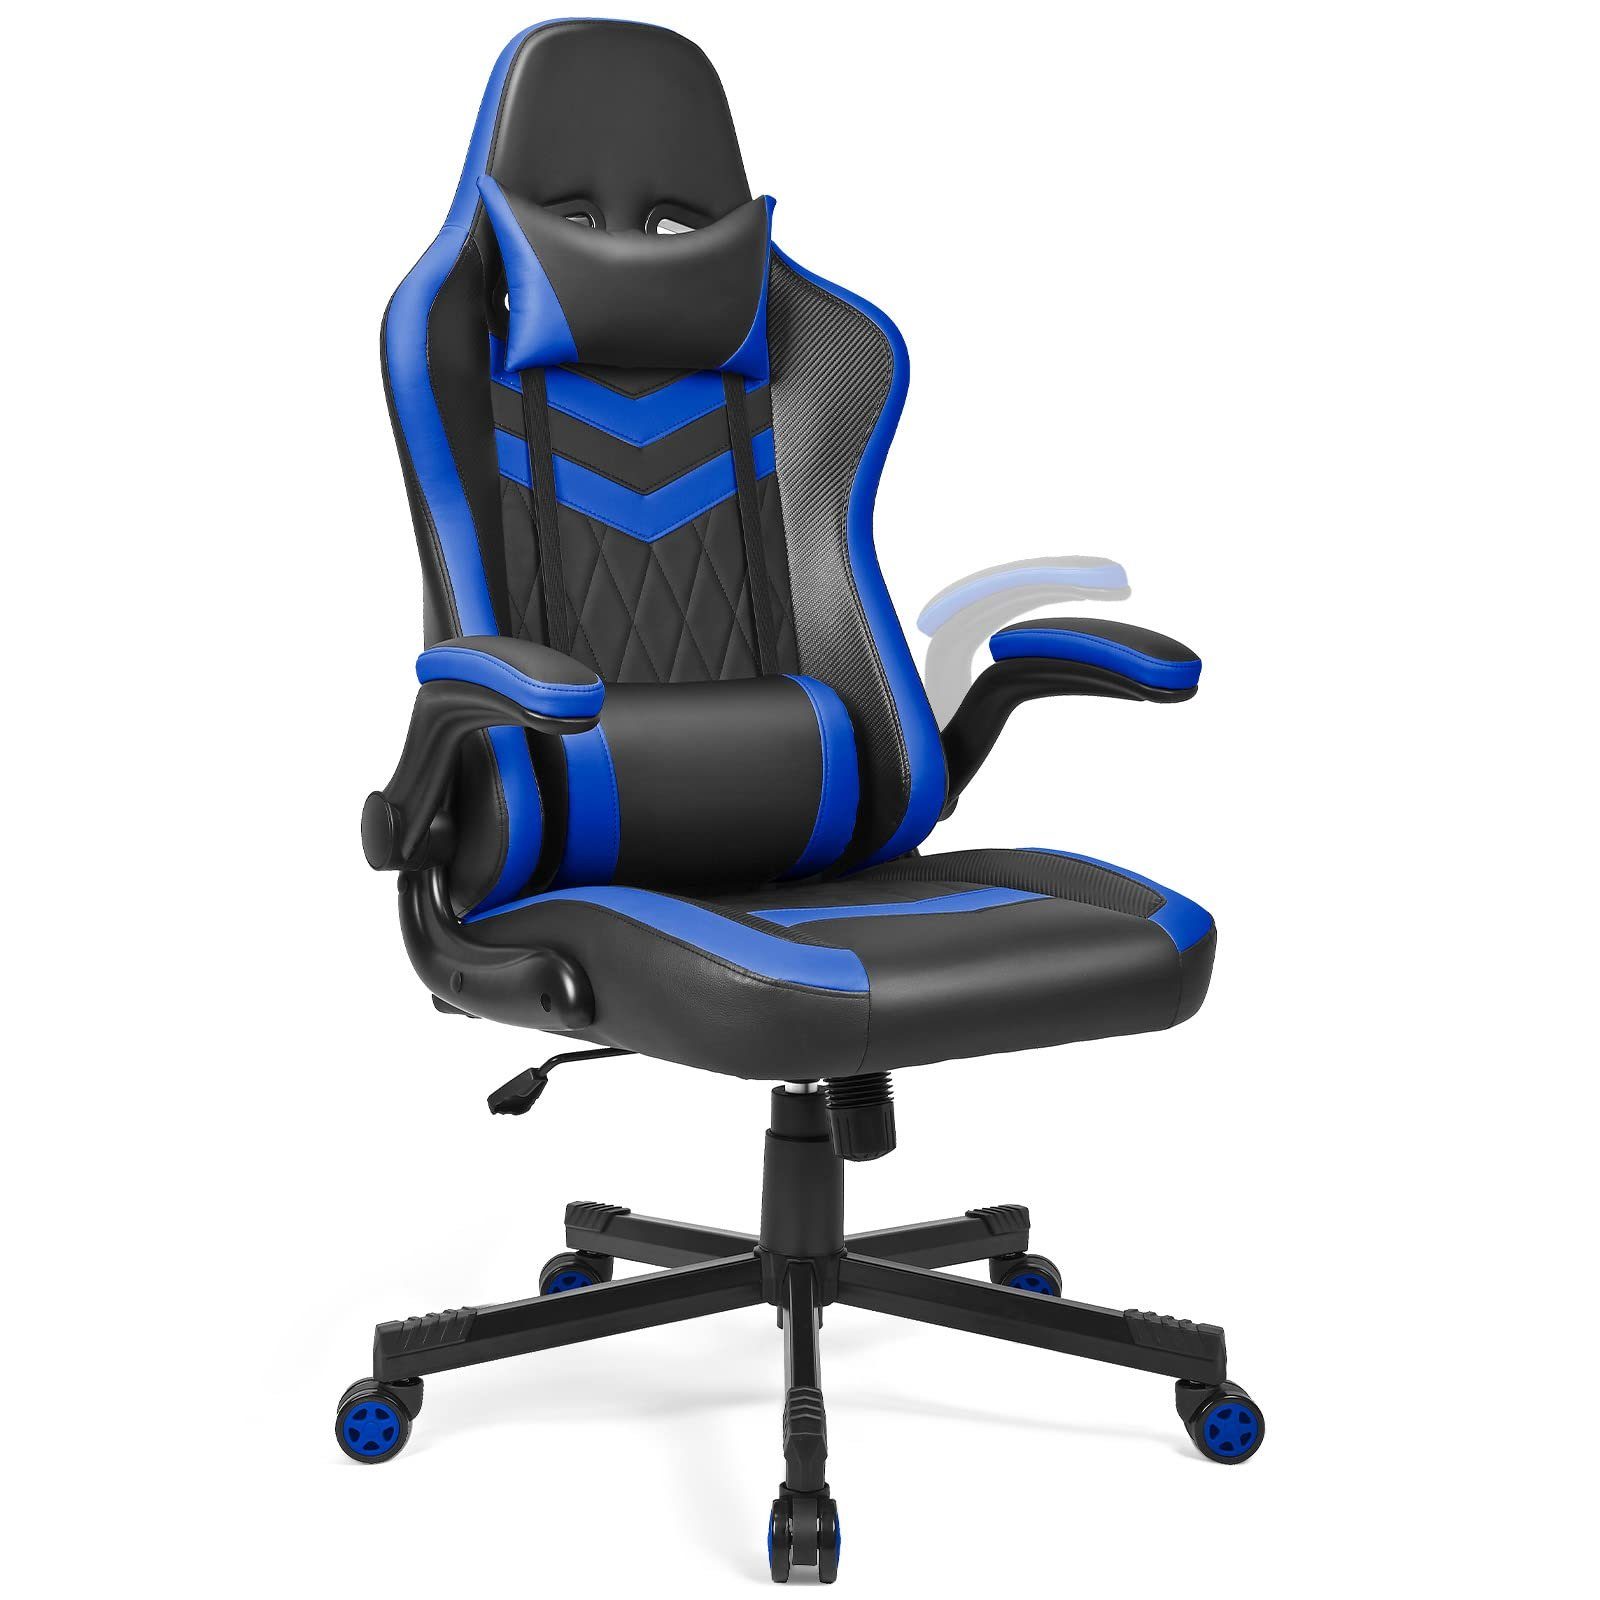 Fangqi Bürostuhl Ergonomischer Bürostuhl, Computer-Gaming-Stuhl, 150kg (Klappbare Armlehnen, breite Sitzfläche, hohe Rückenlehne, Kopfstütze, Lendenkissen 360° drehbar) Blau